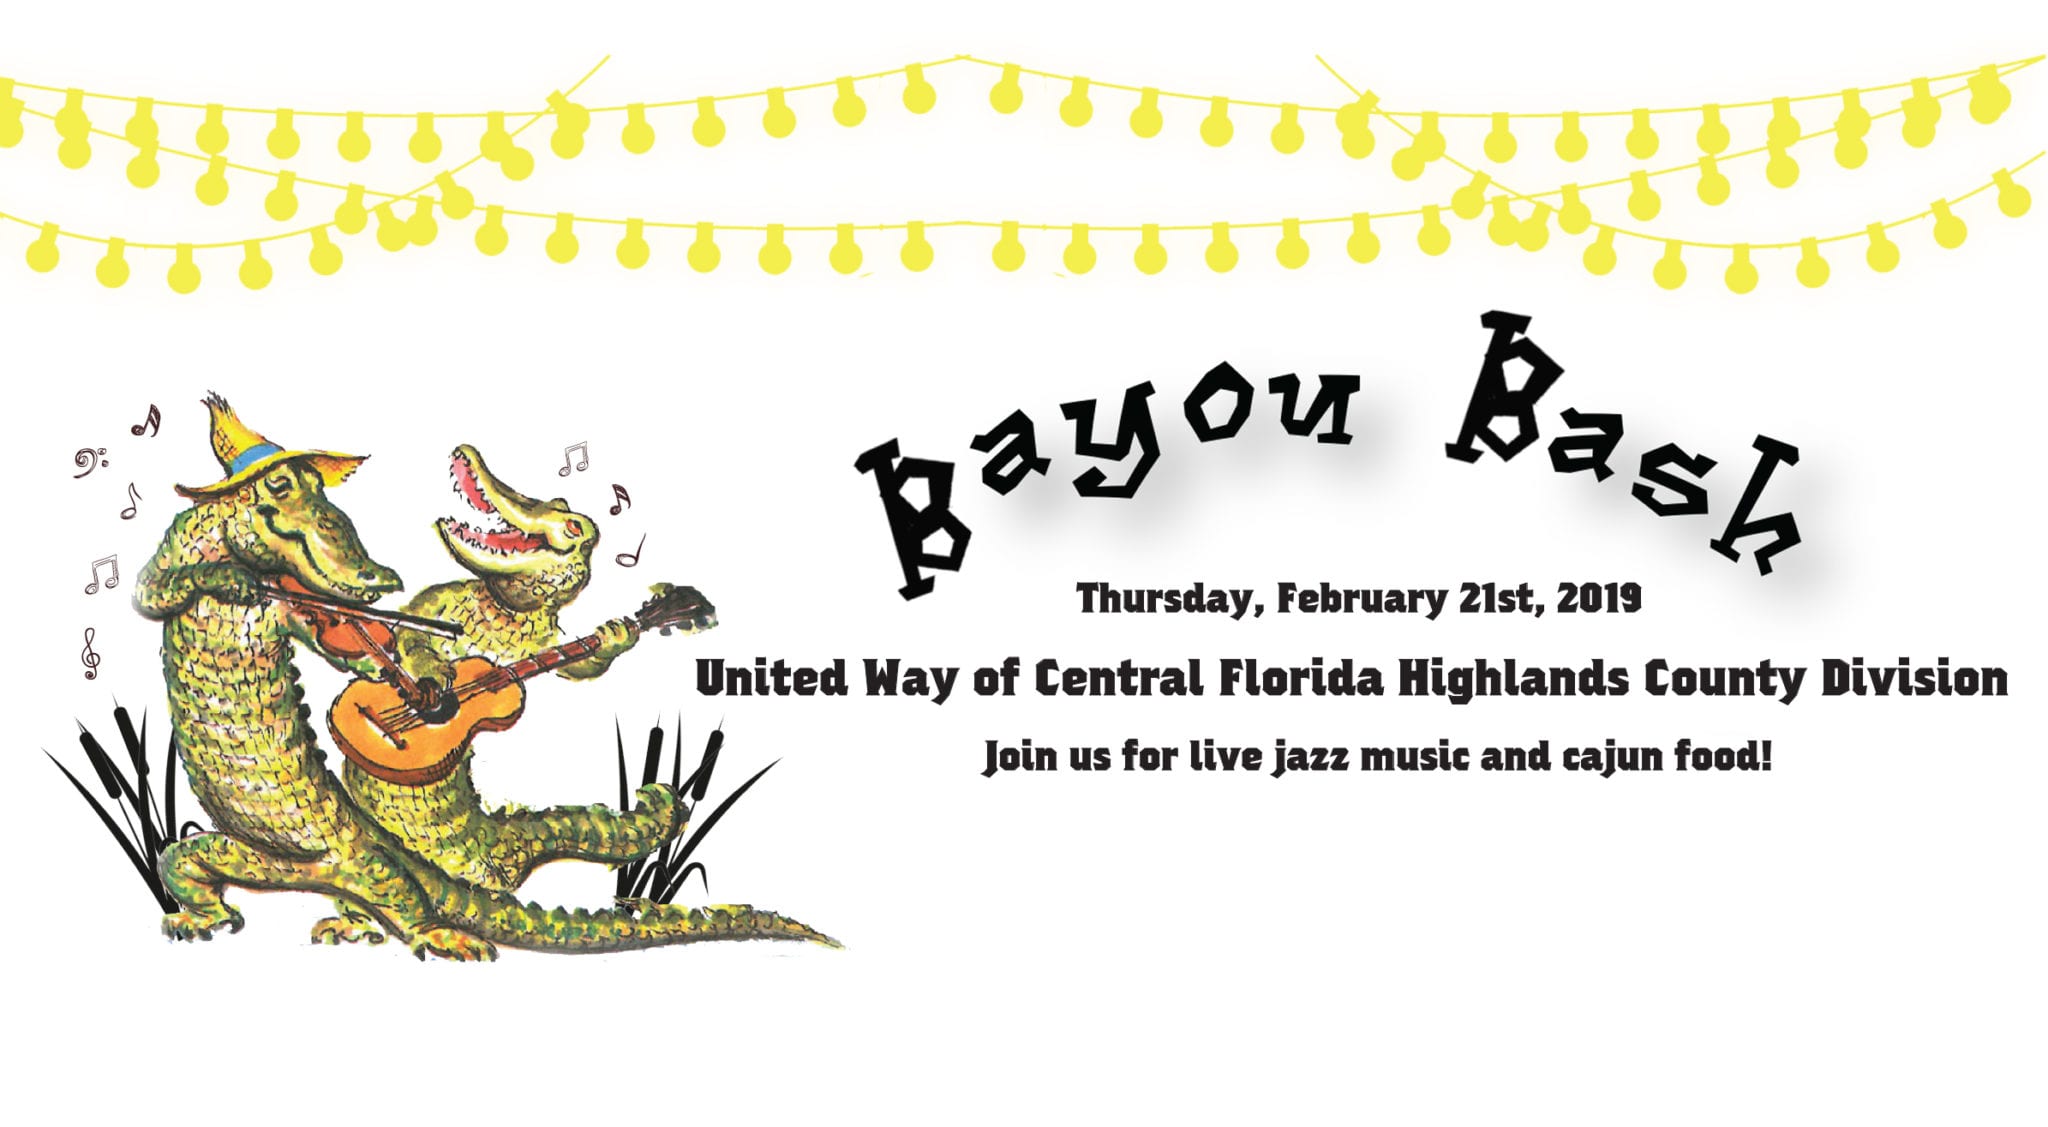 Bayou Bash United Way of Central Florida